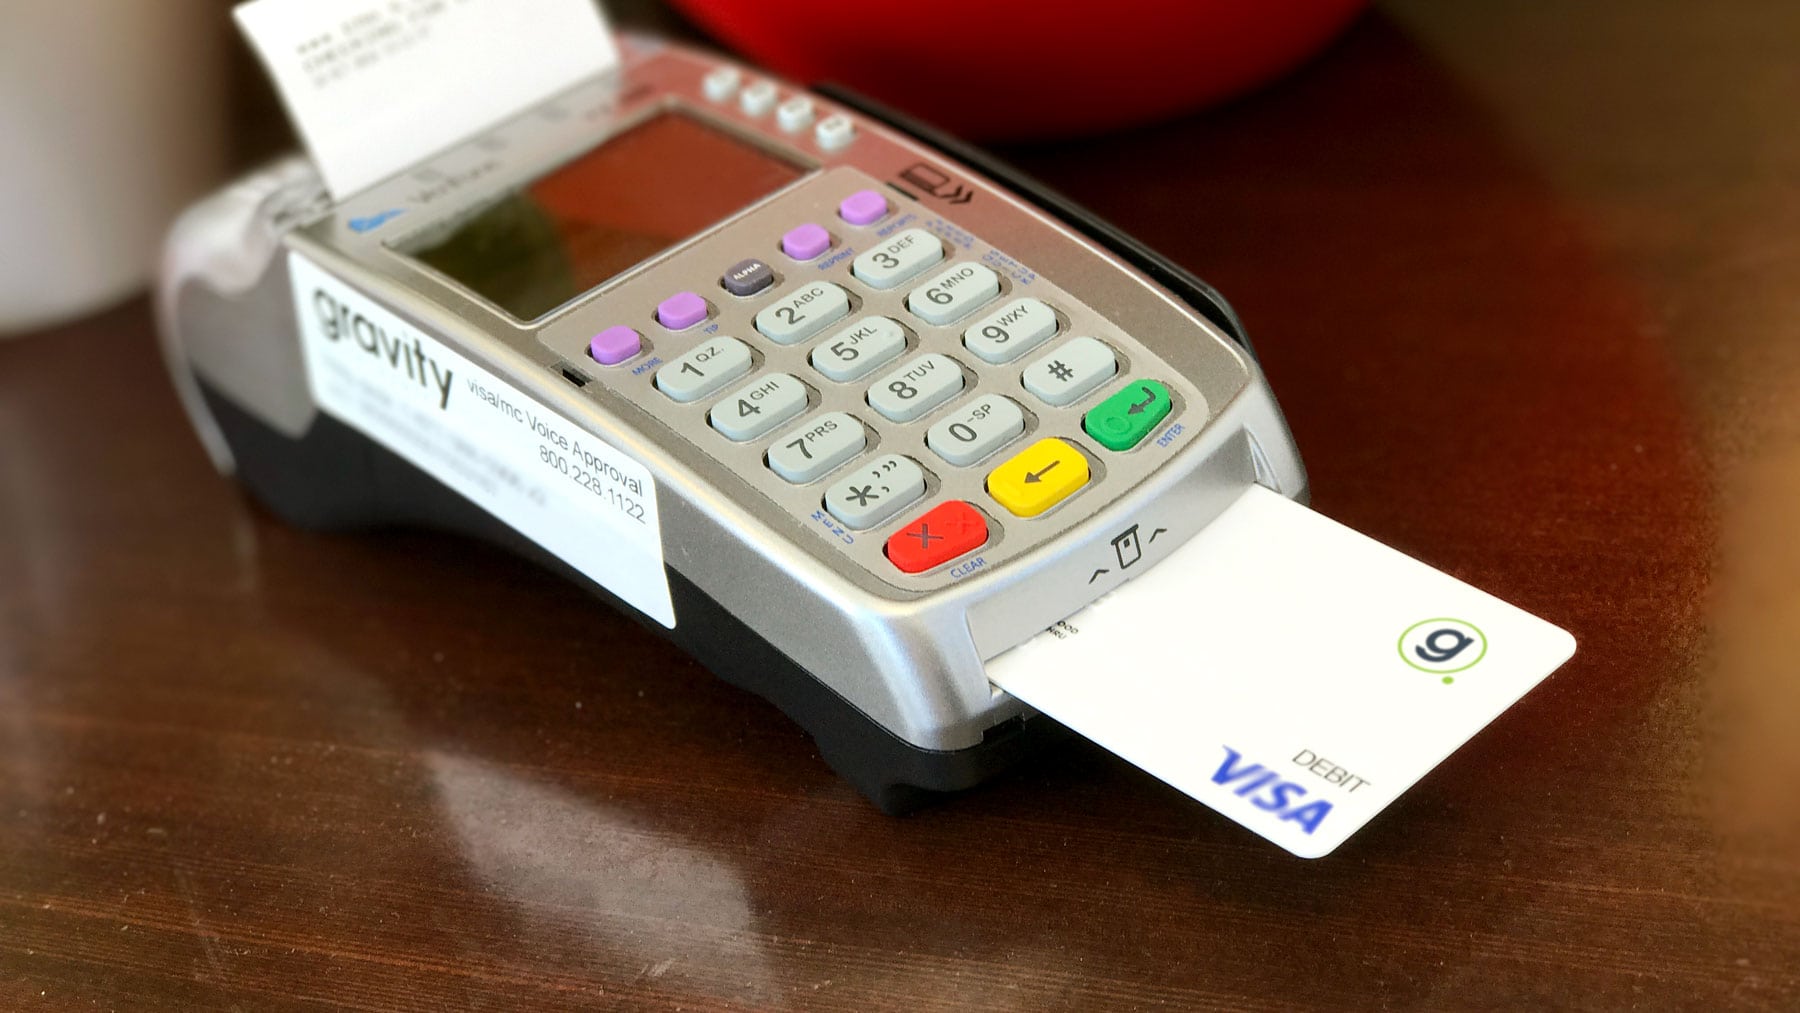 debit card reader